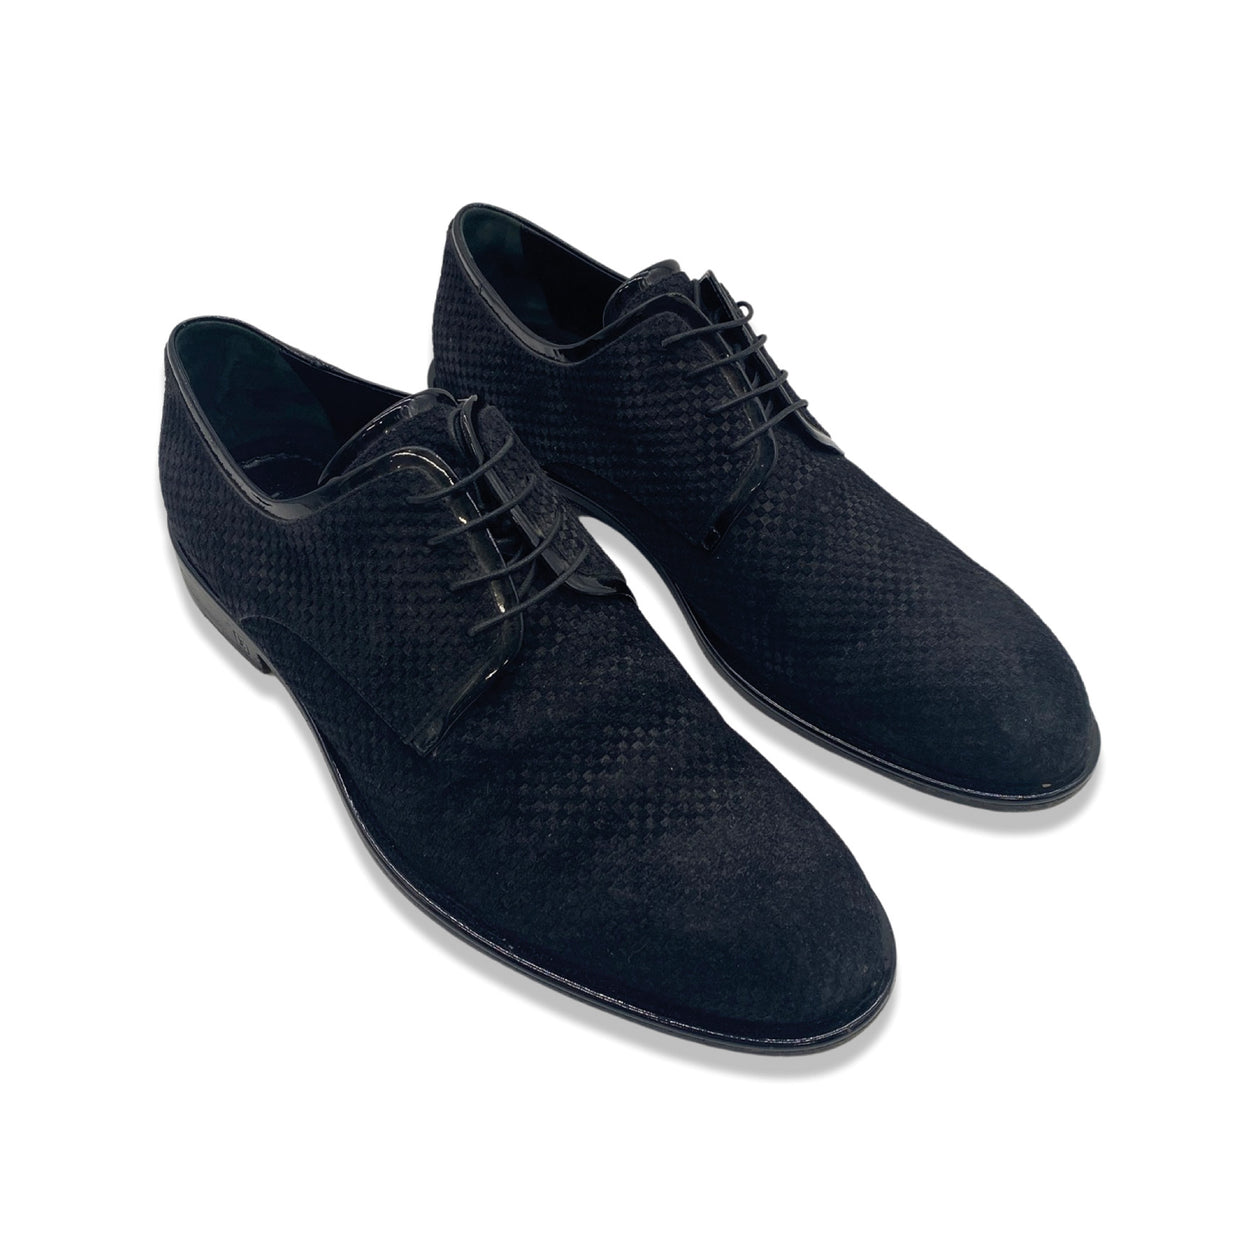 Louis Vuitton Navy Blue Suede Oxford Loafers Size 39.5 Louis Vuitton